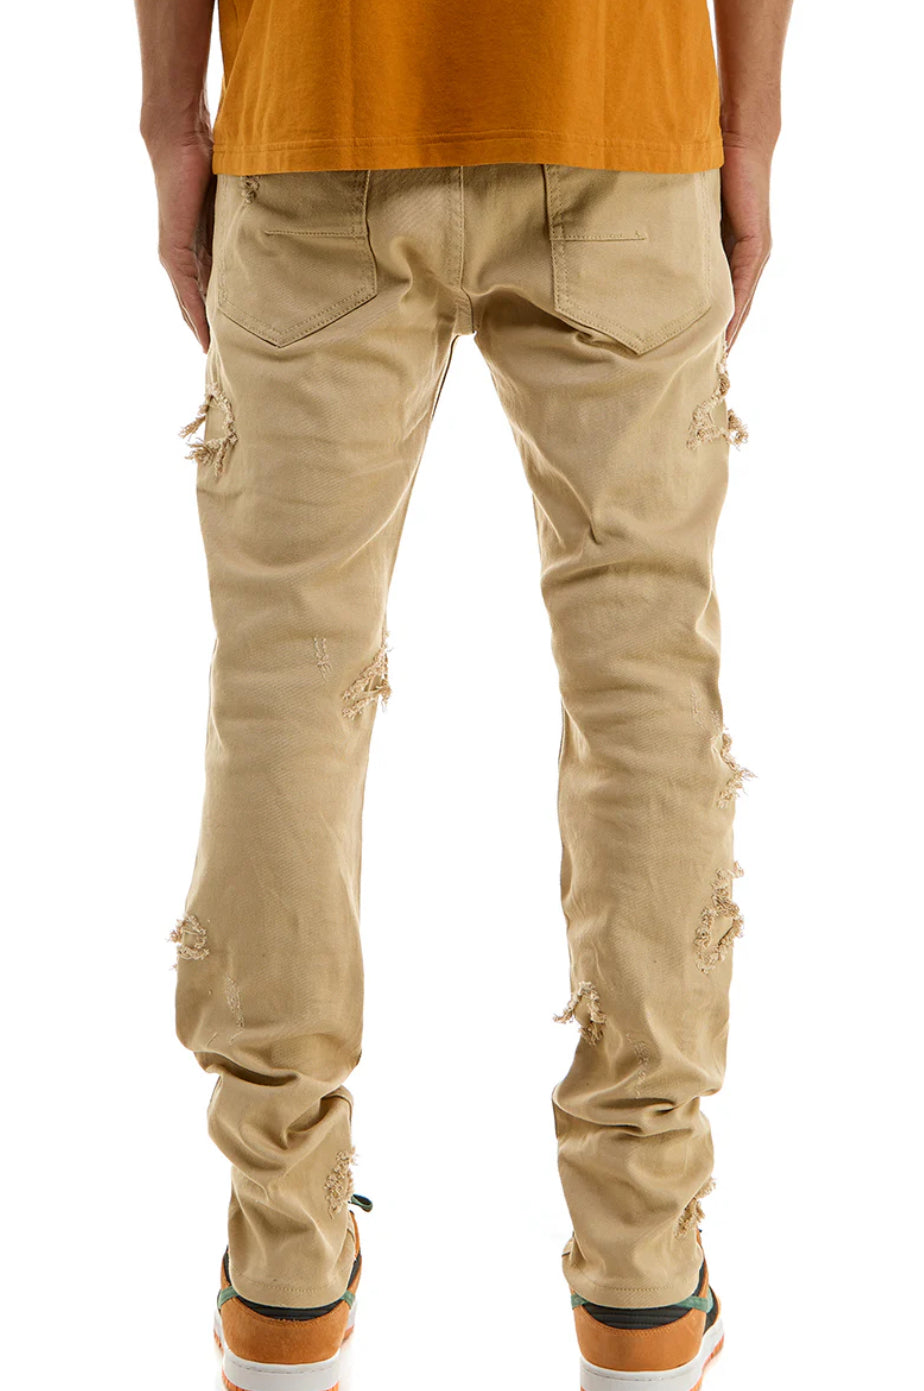 “NEW” KDNK Khaki Patched Pants